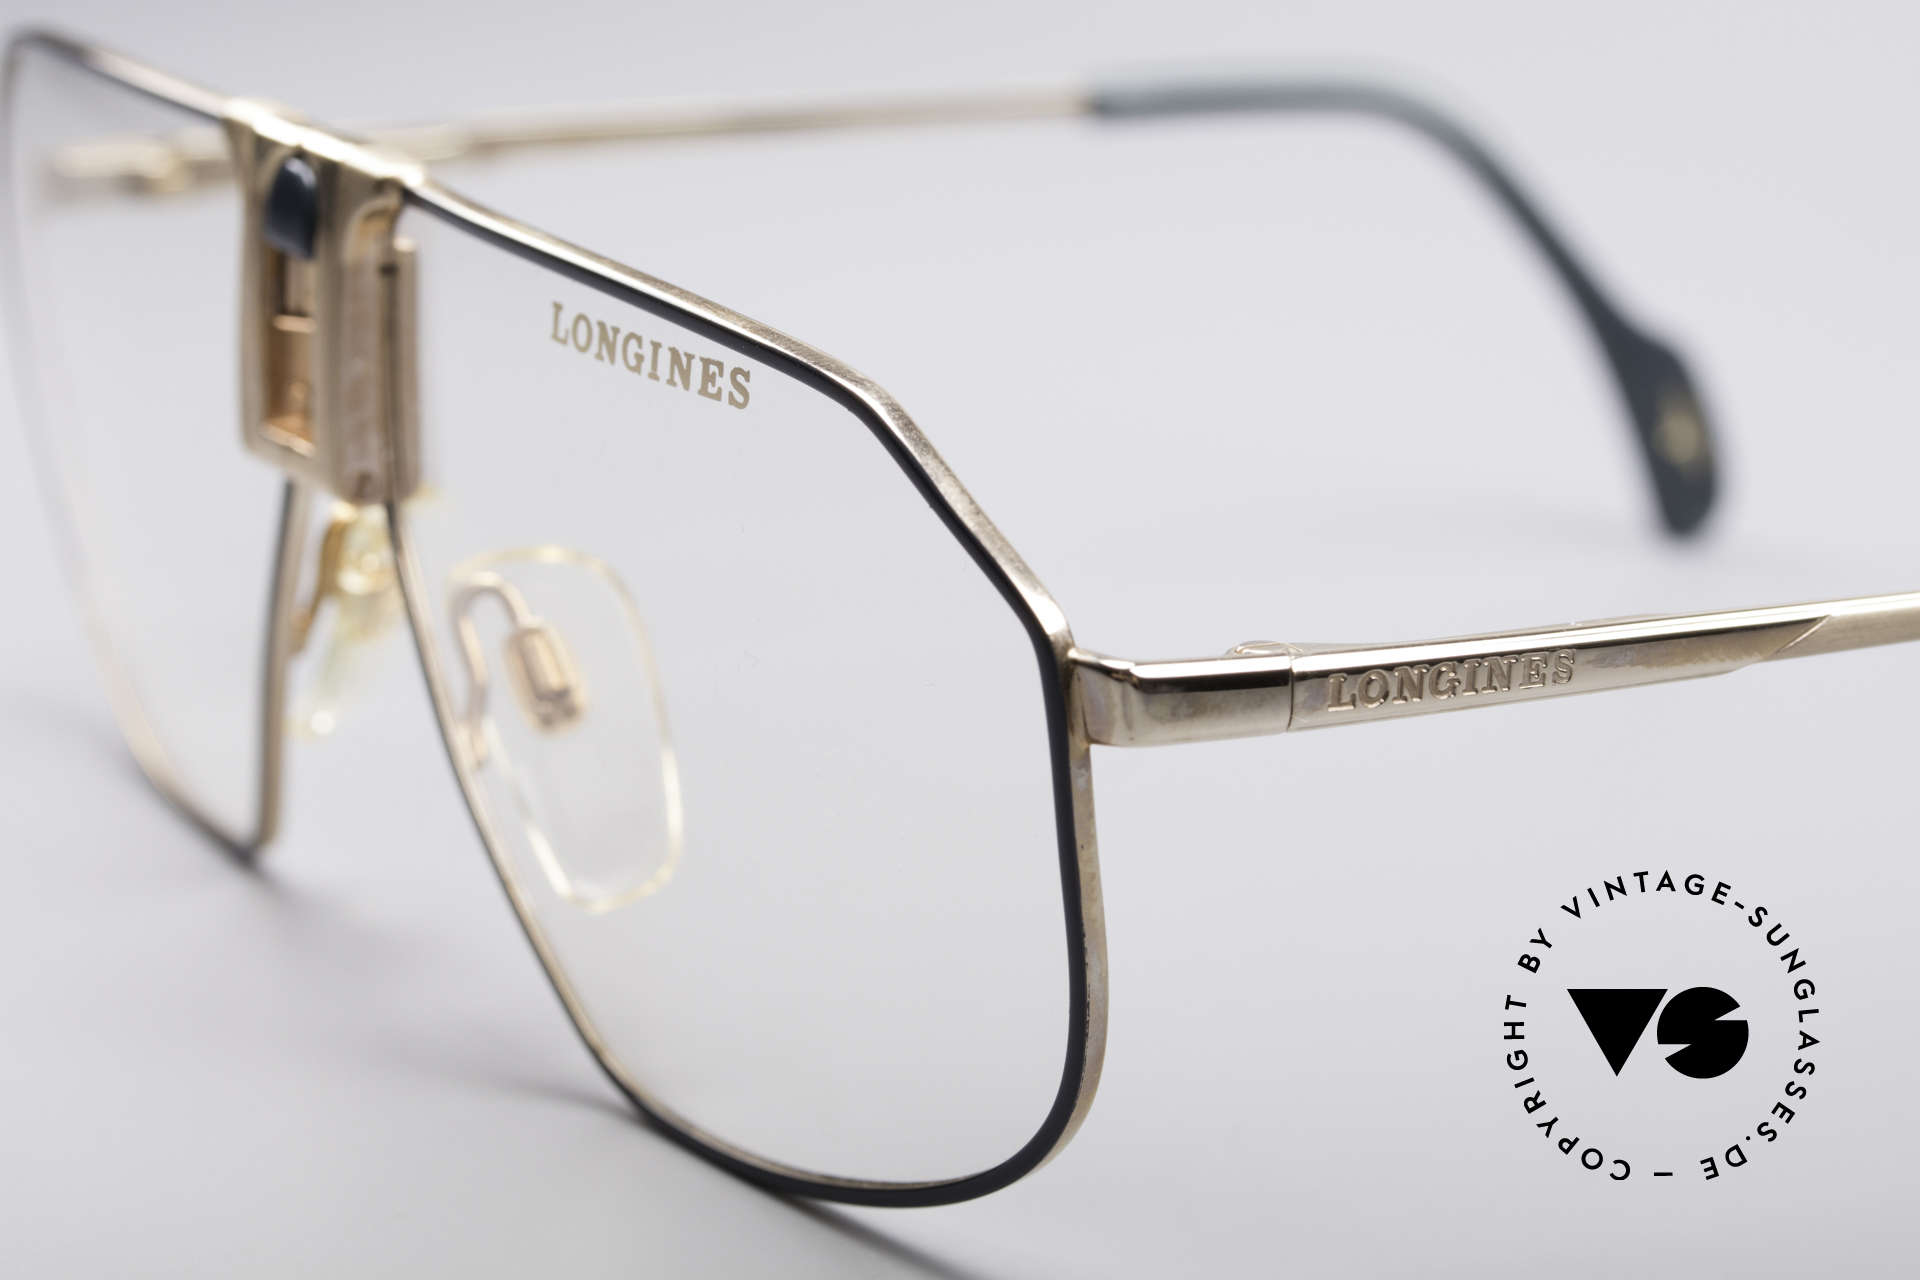 Longines 0153 80's Luxury Men's Frame, unworn (like all our premium vintage eyeglass-frames), Made for Men